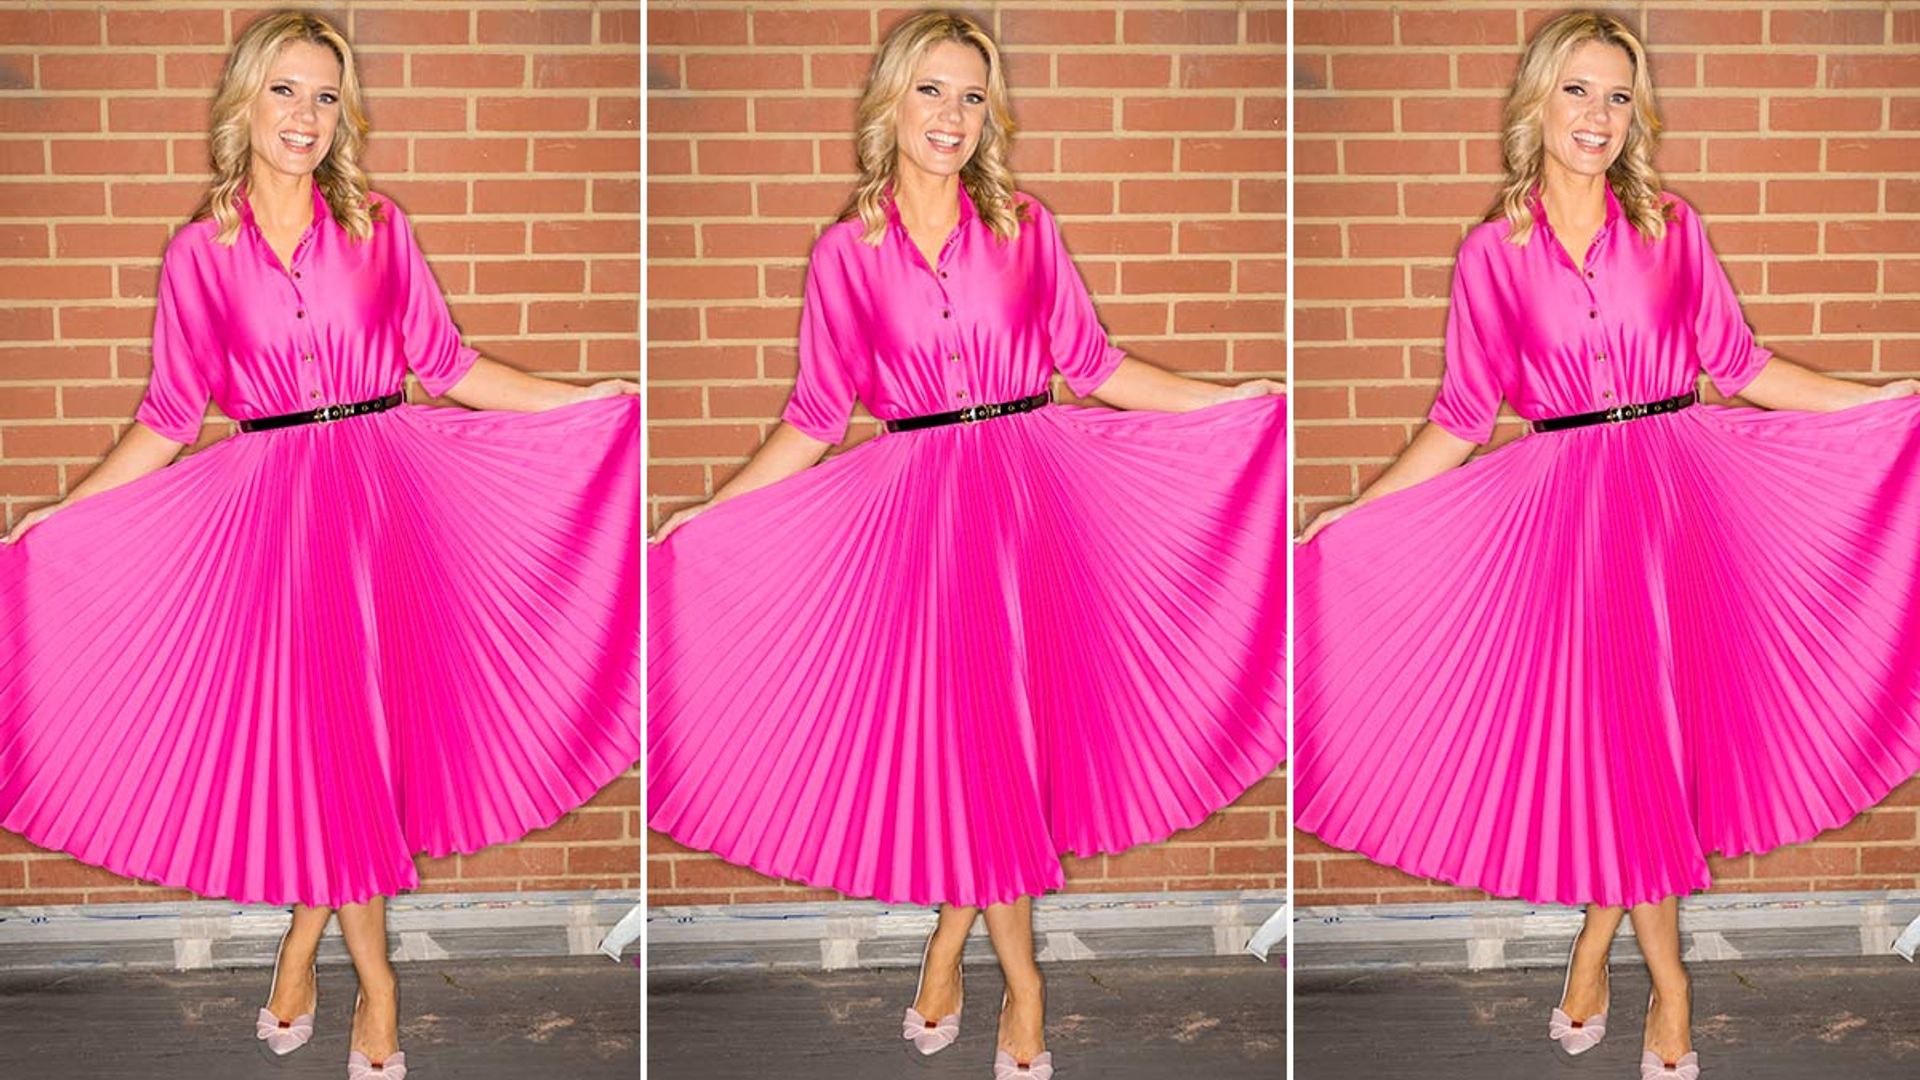 Charlotte Hawkins channels a Disney princess on GMB in bright pink dress 